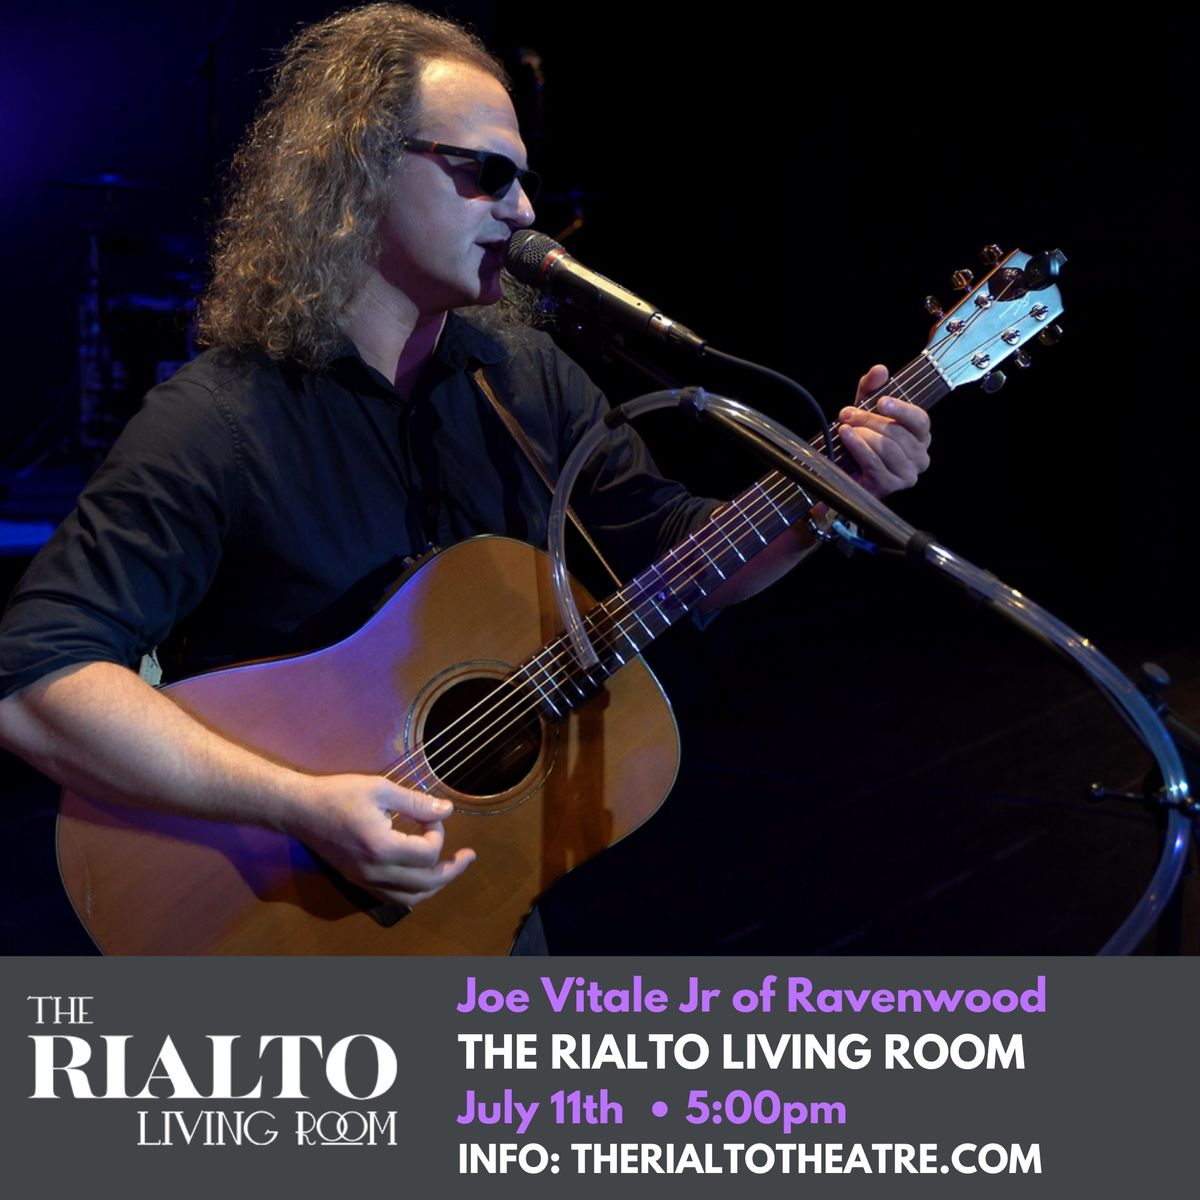 Joe Vitale Jr of Ravenwood in The Rialto Living Room